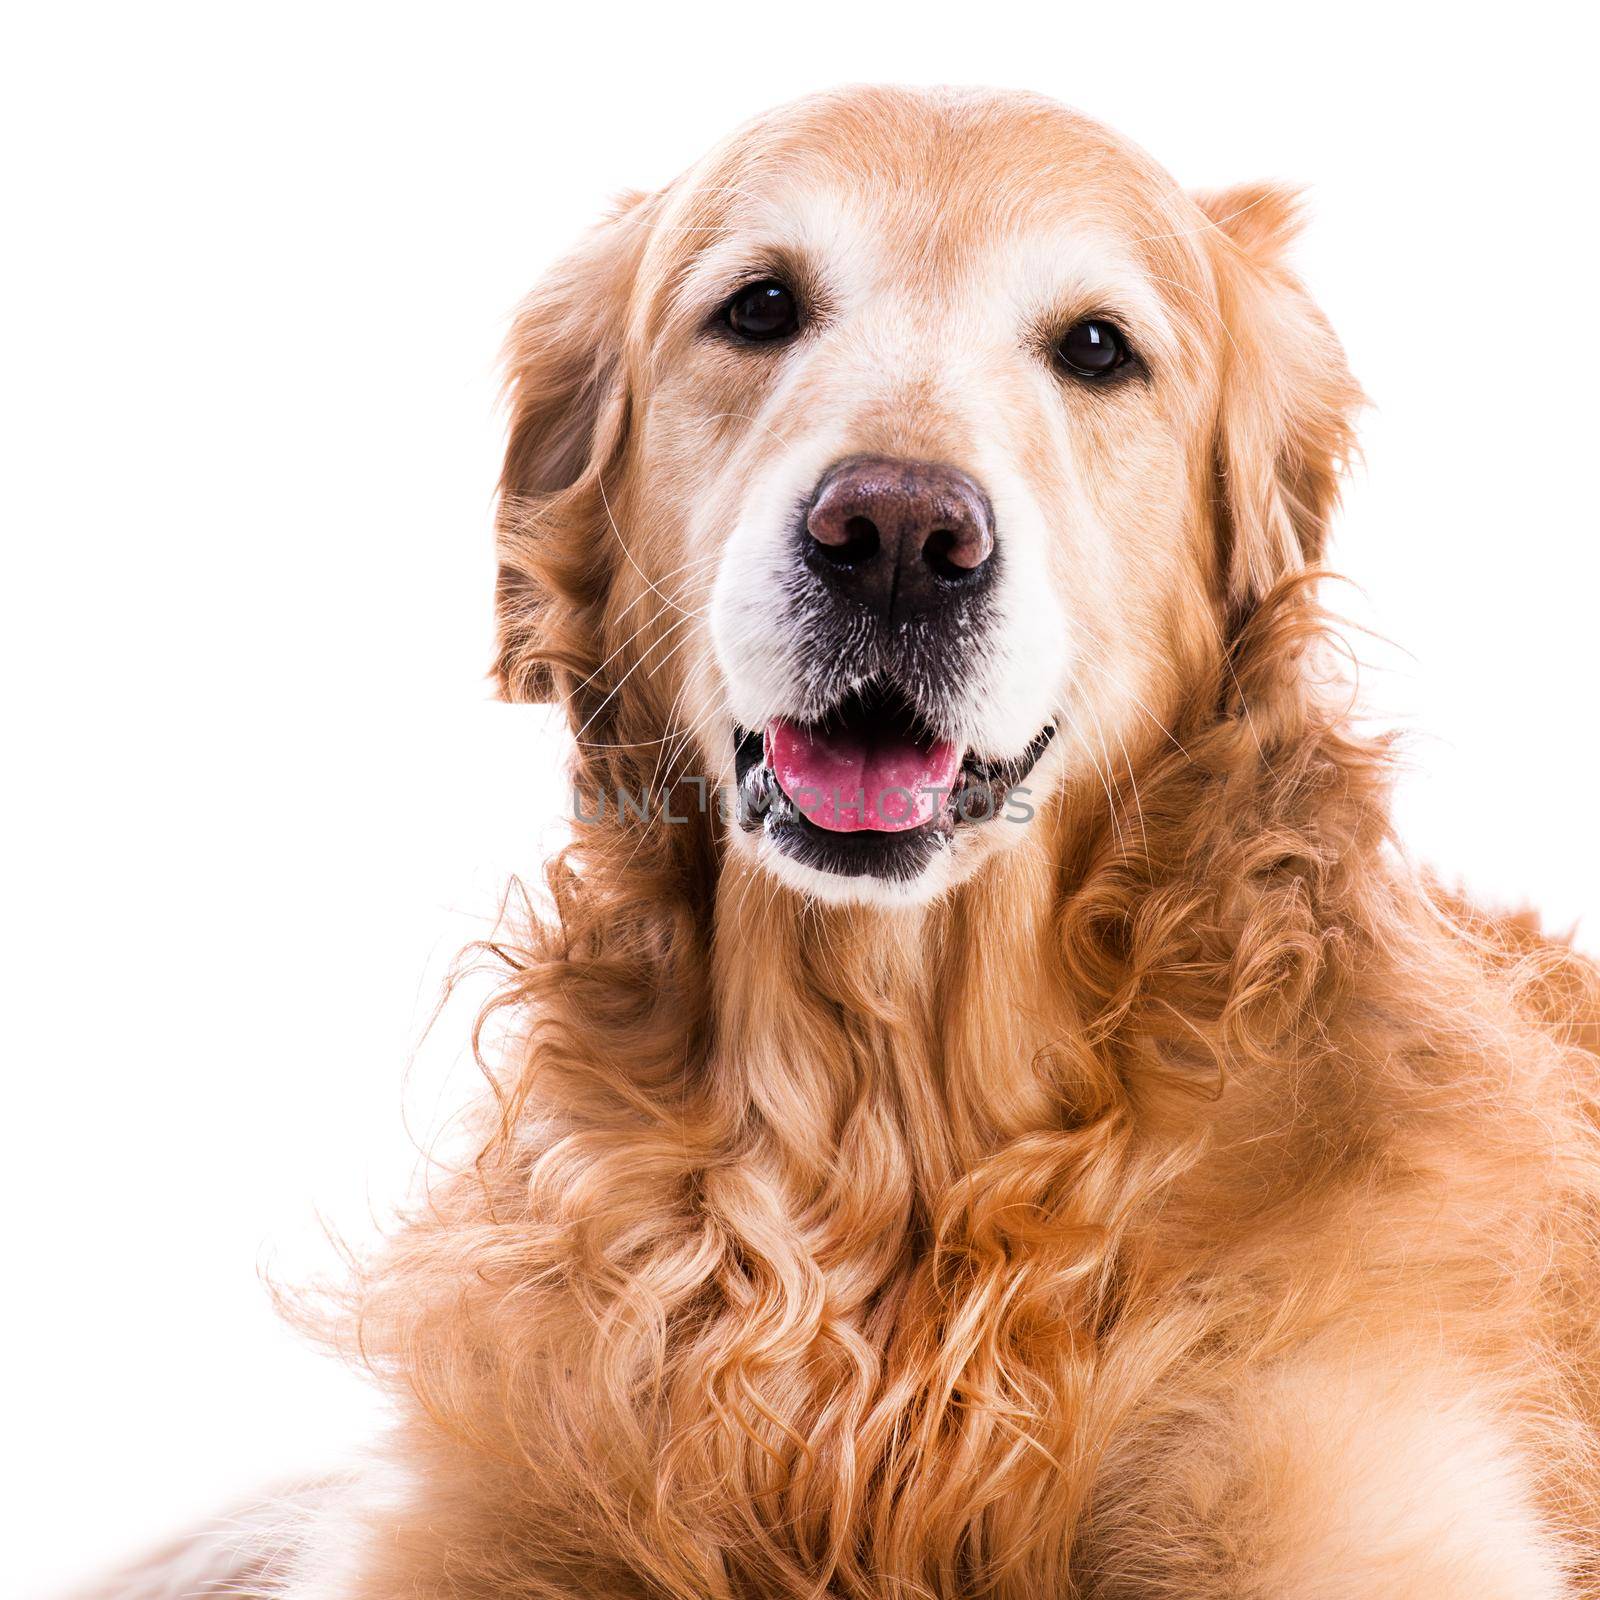 purebred golden retriever dog close-up on white background